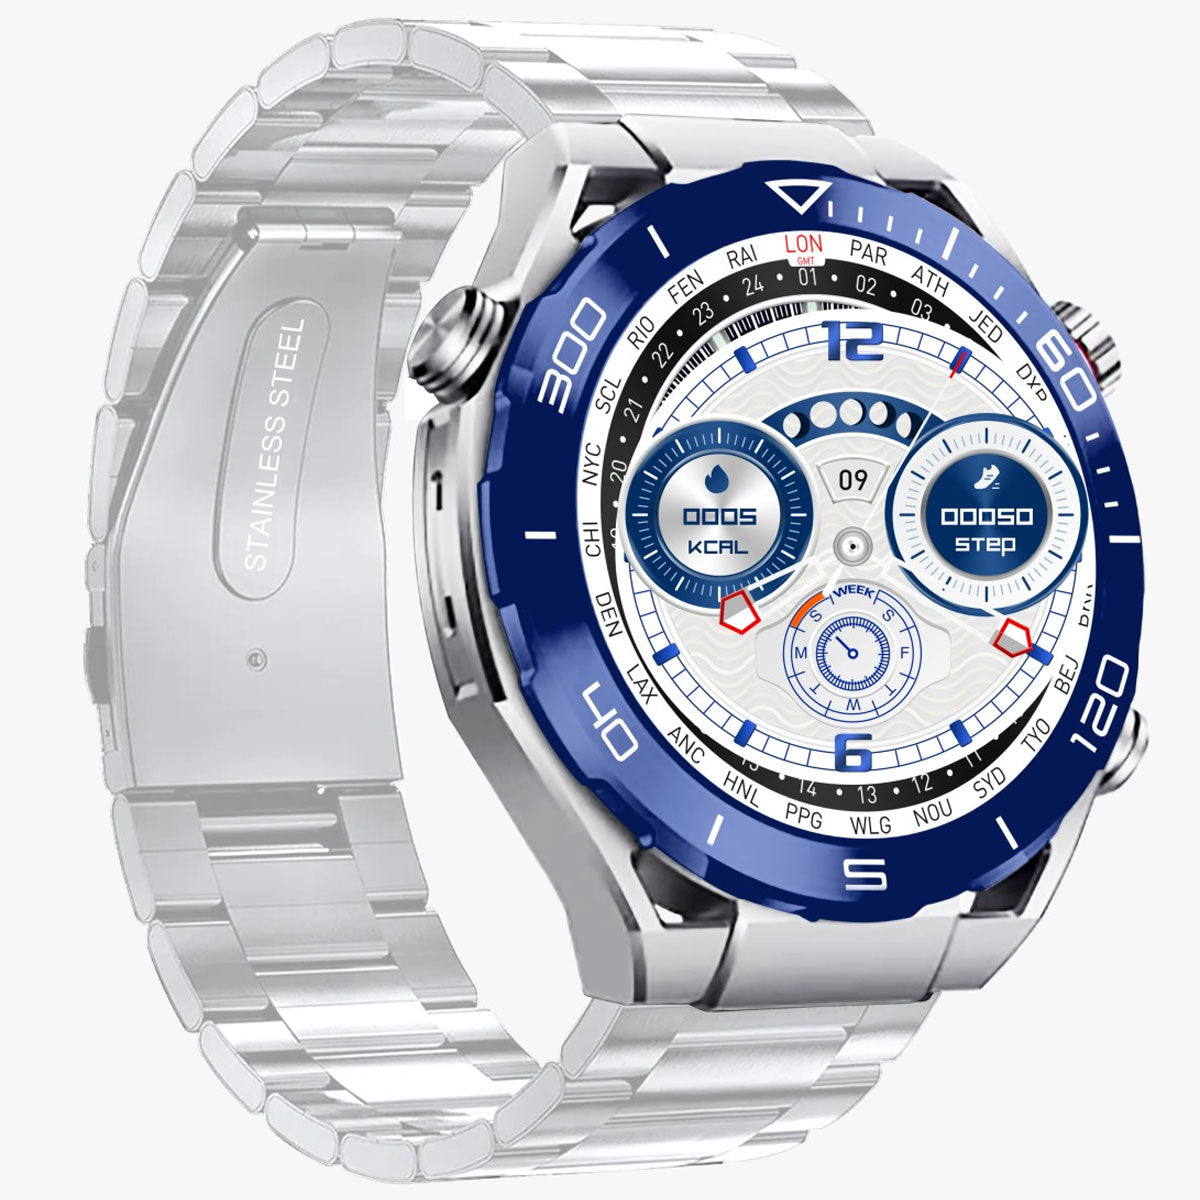 Smartwatch Reloj P9 Ultimate Fralugio Nfc Brújula Hr Bp Nfc